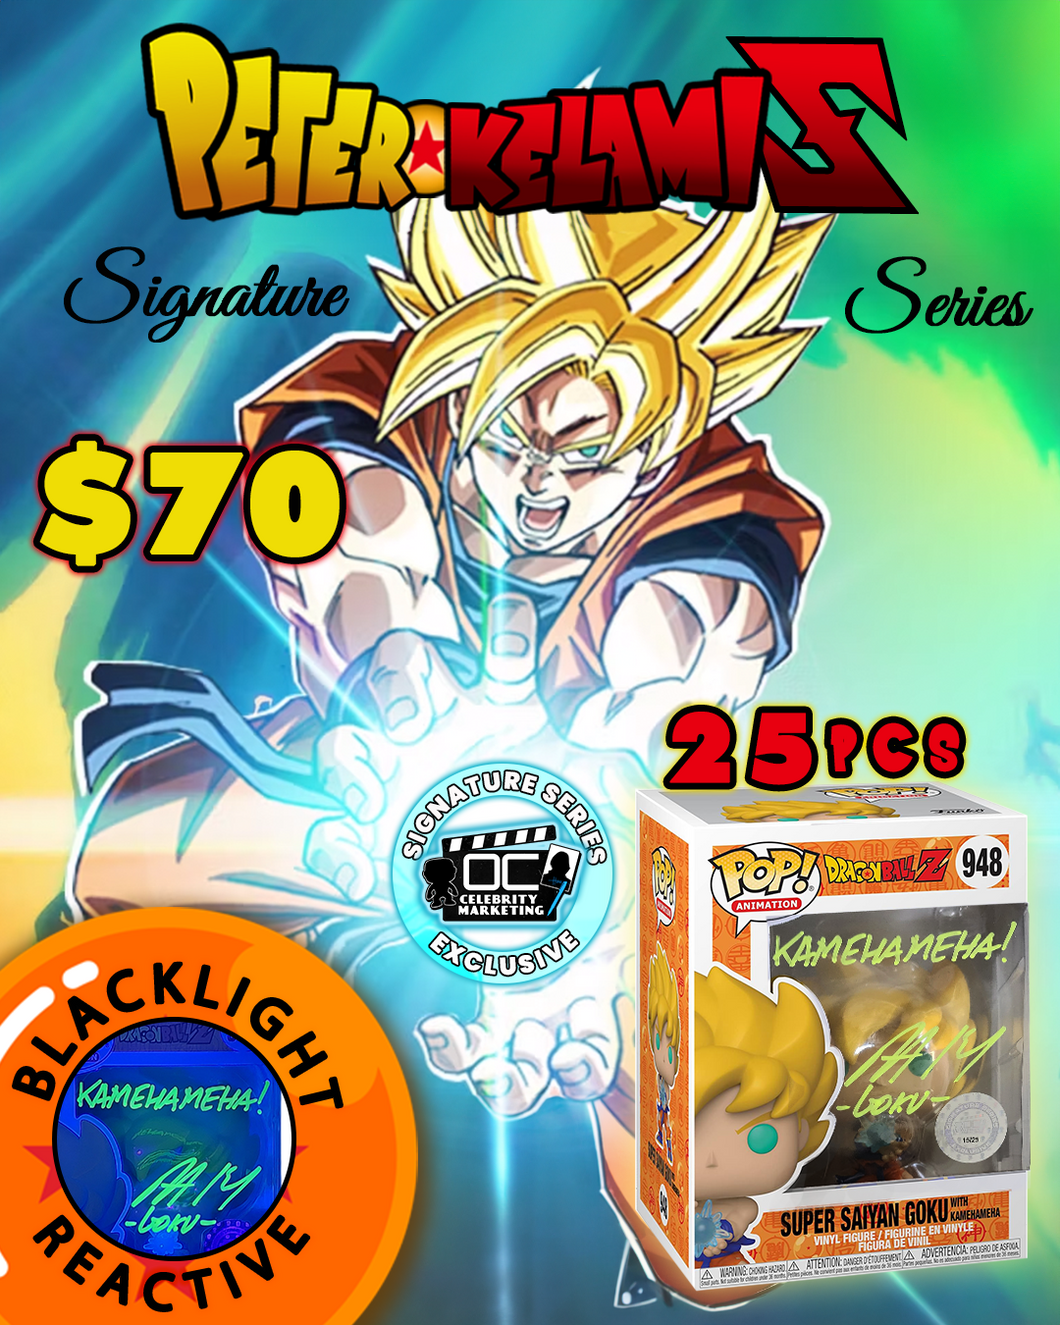 Peter Kelamis Signature Series - Dragon Ball Z Super Saiyan Goku with Kamehameha Funko #948 (#/25)